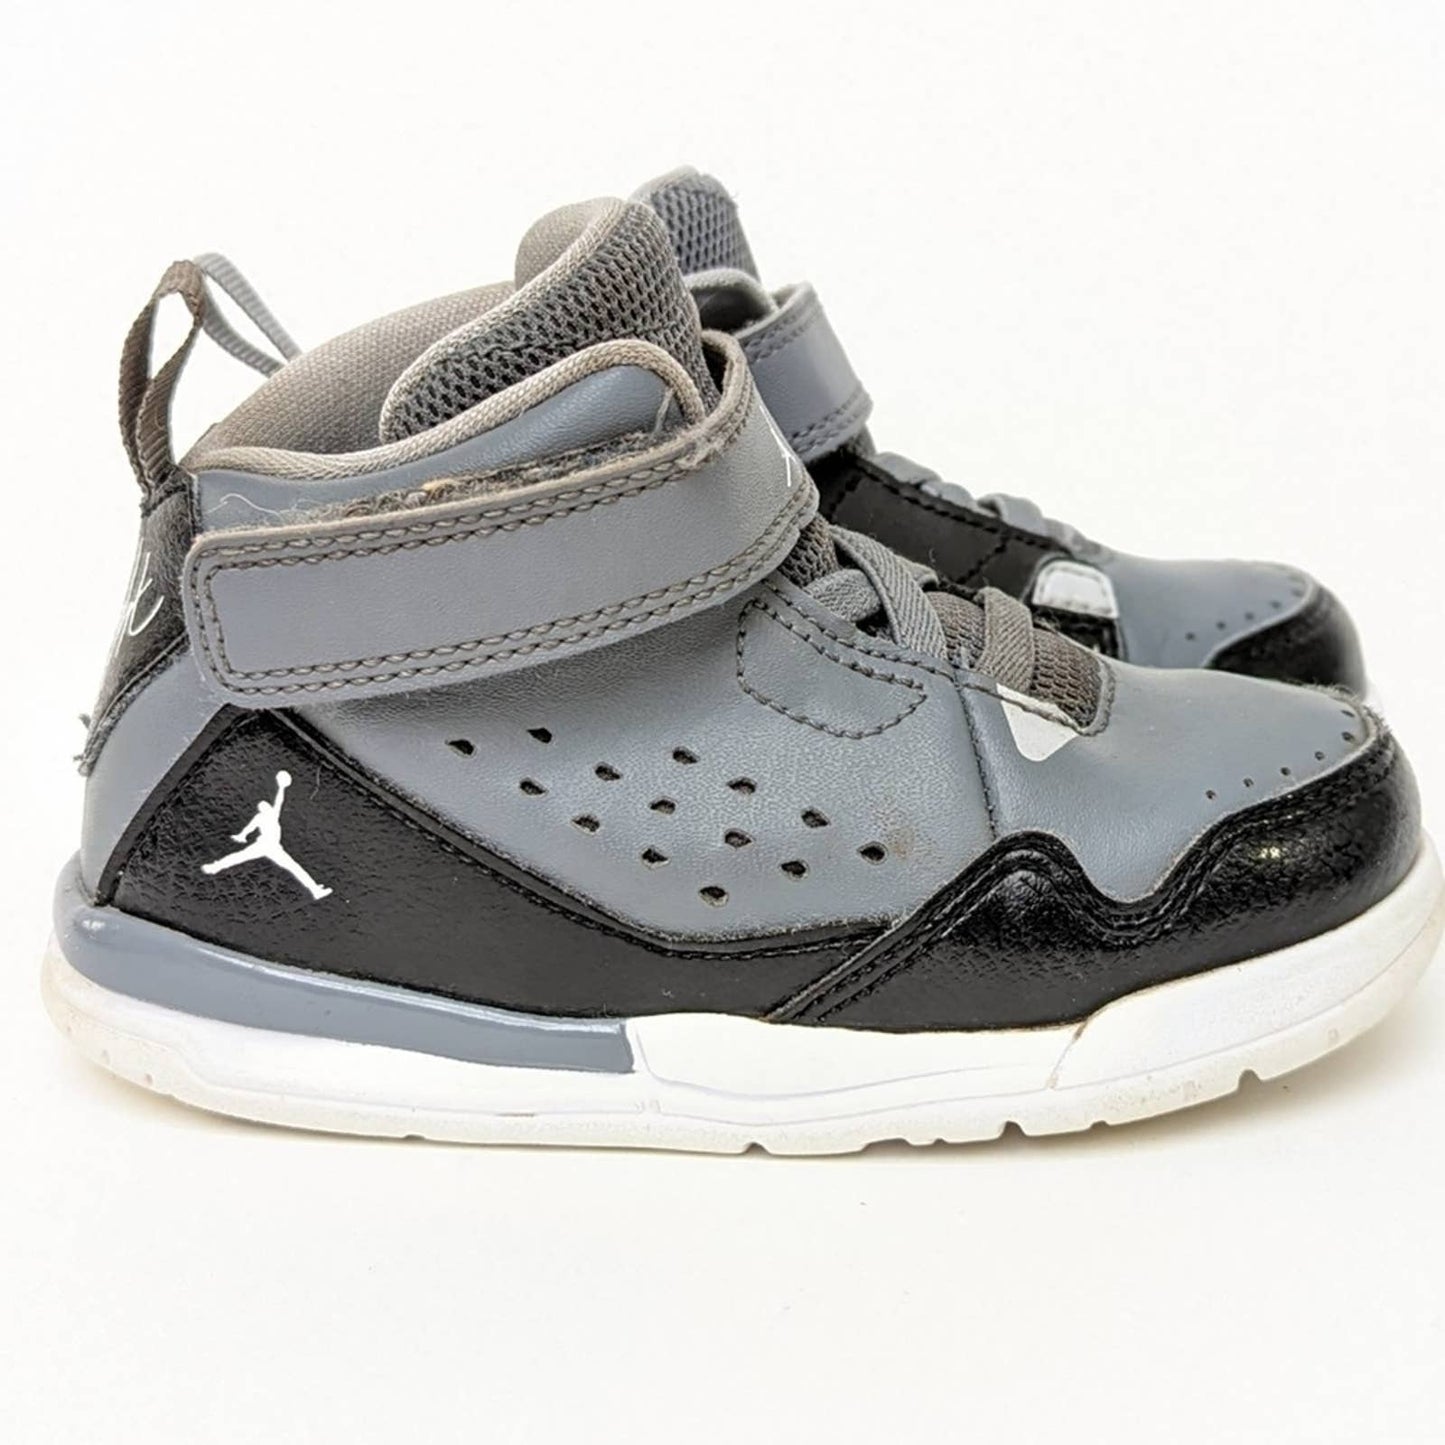 Nike Air Jordan Flight SC-3 (BT) Baby Toddlers Basketball Shoes - 7C